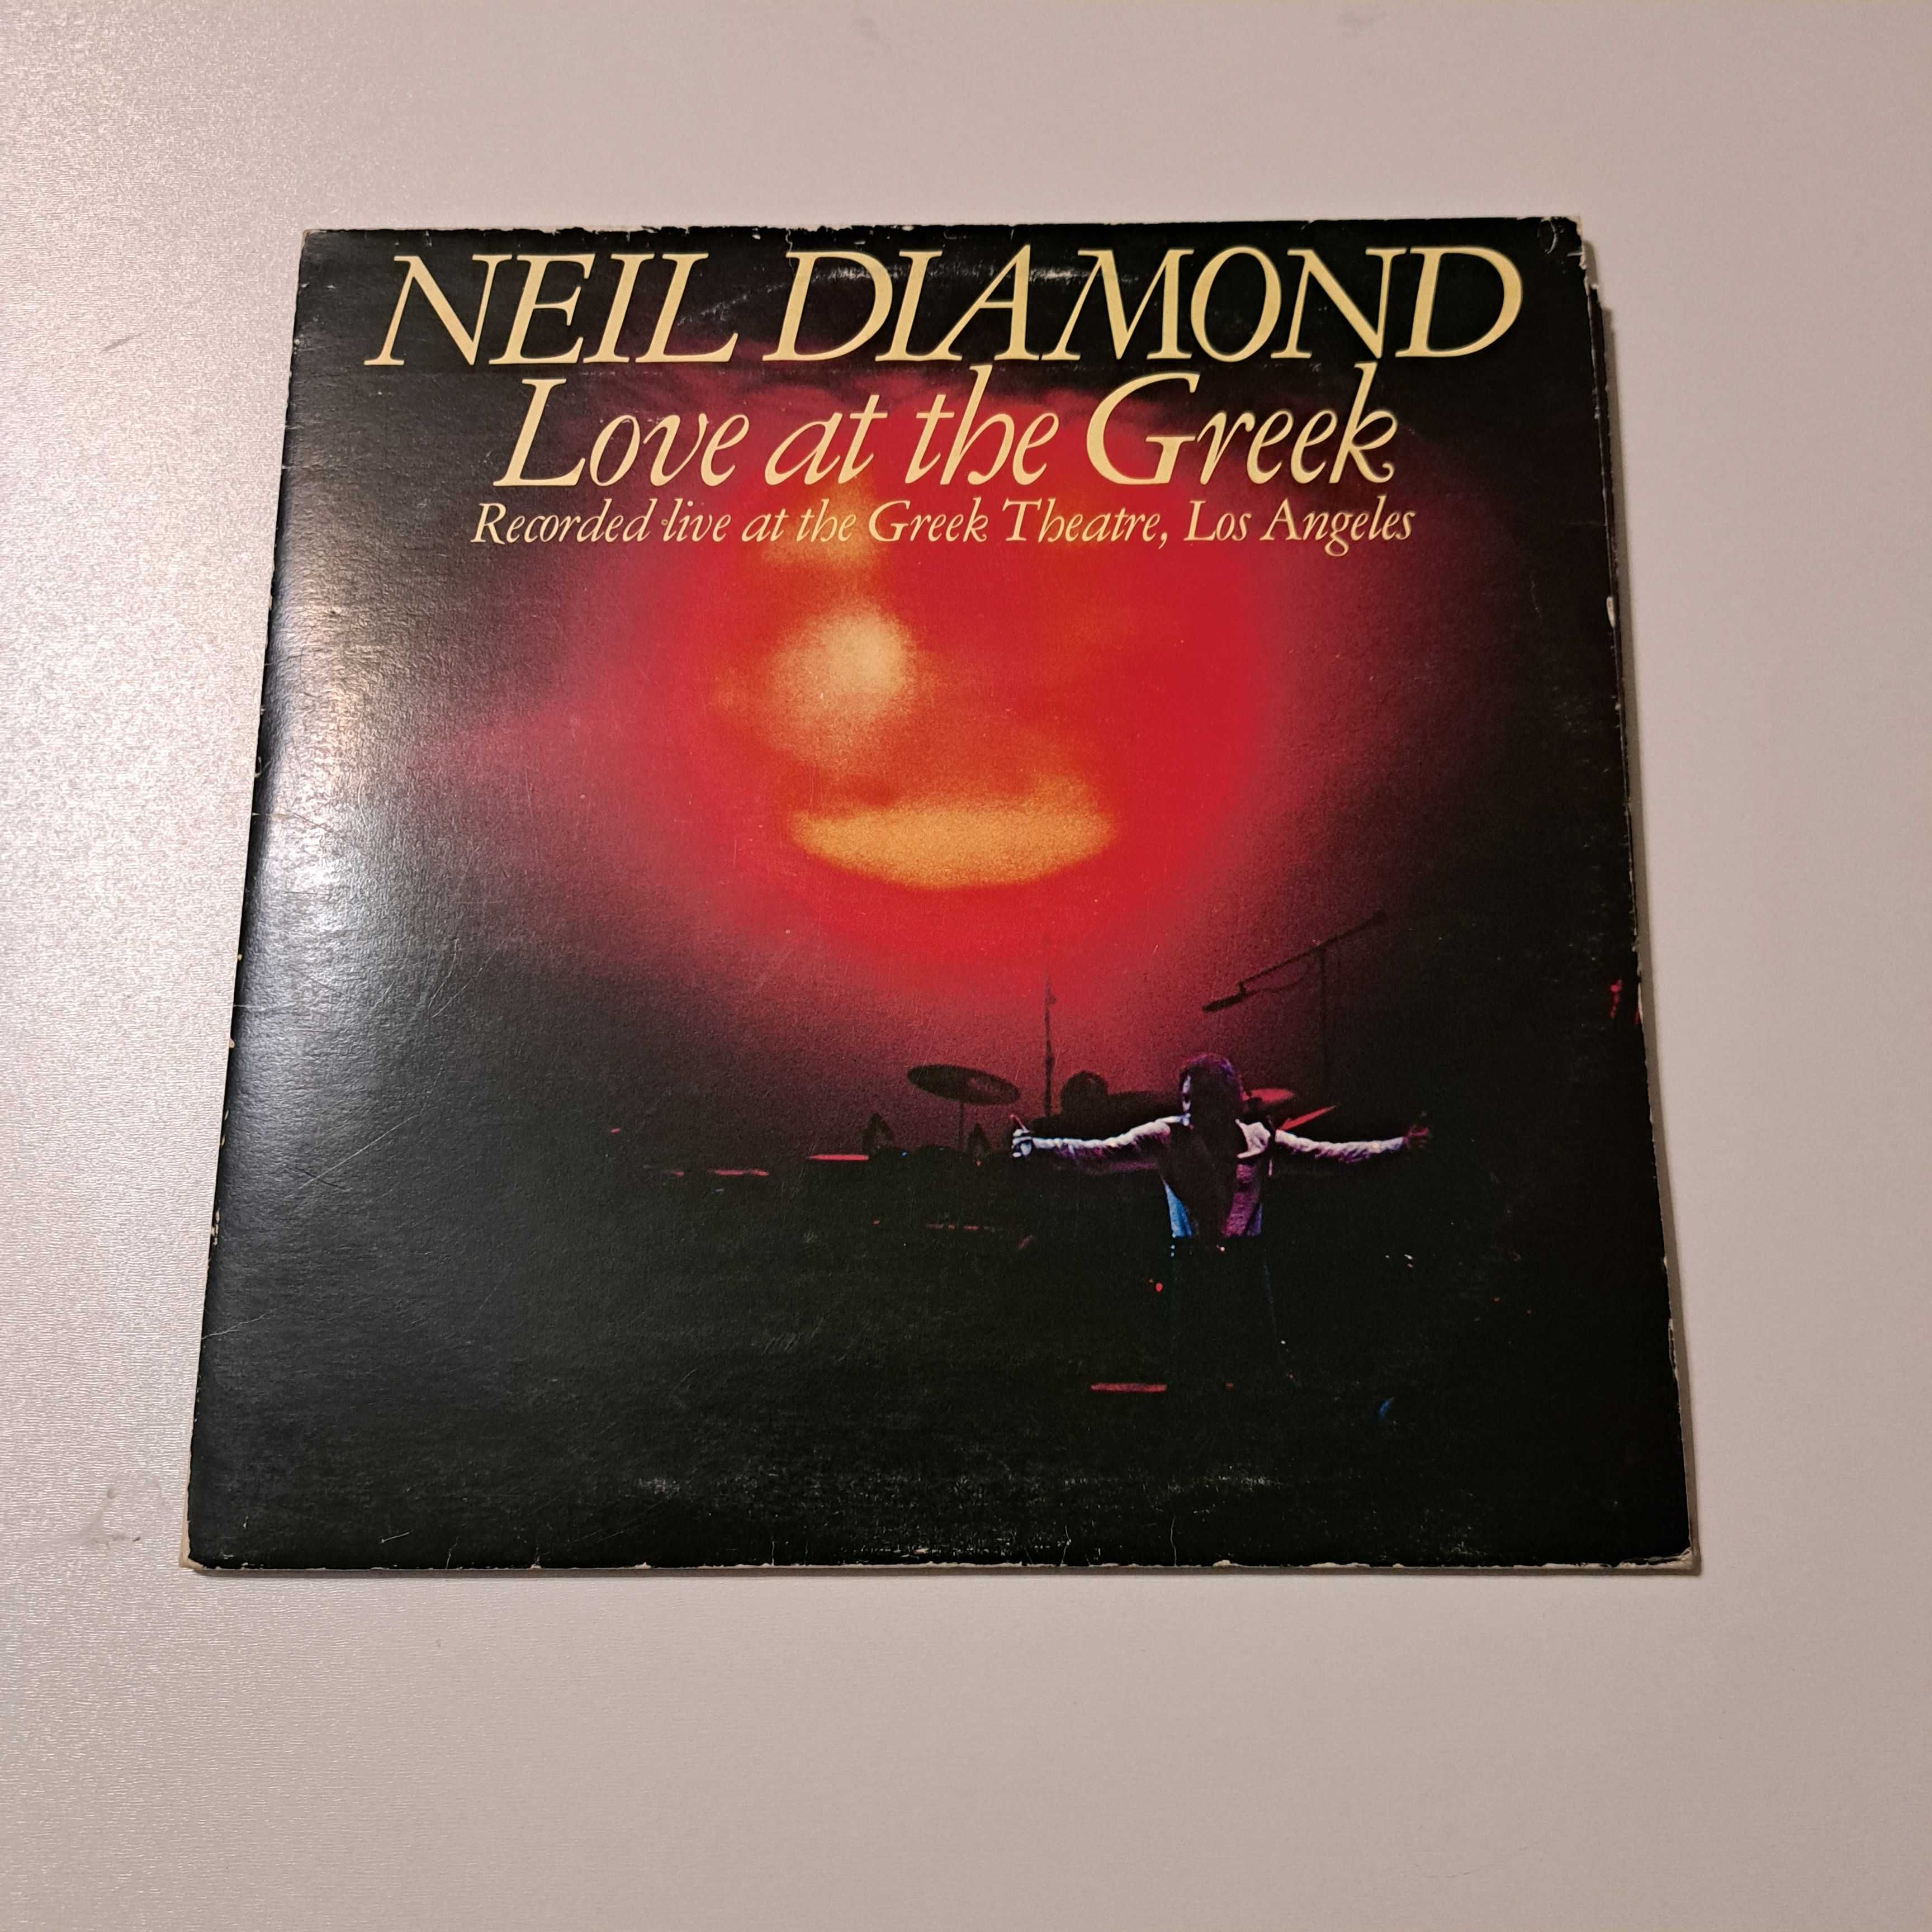 Płyta Winylowa  Neil Diamond Love At The Greek  2LP